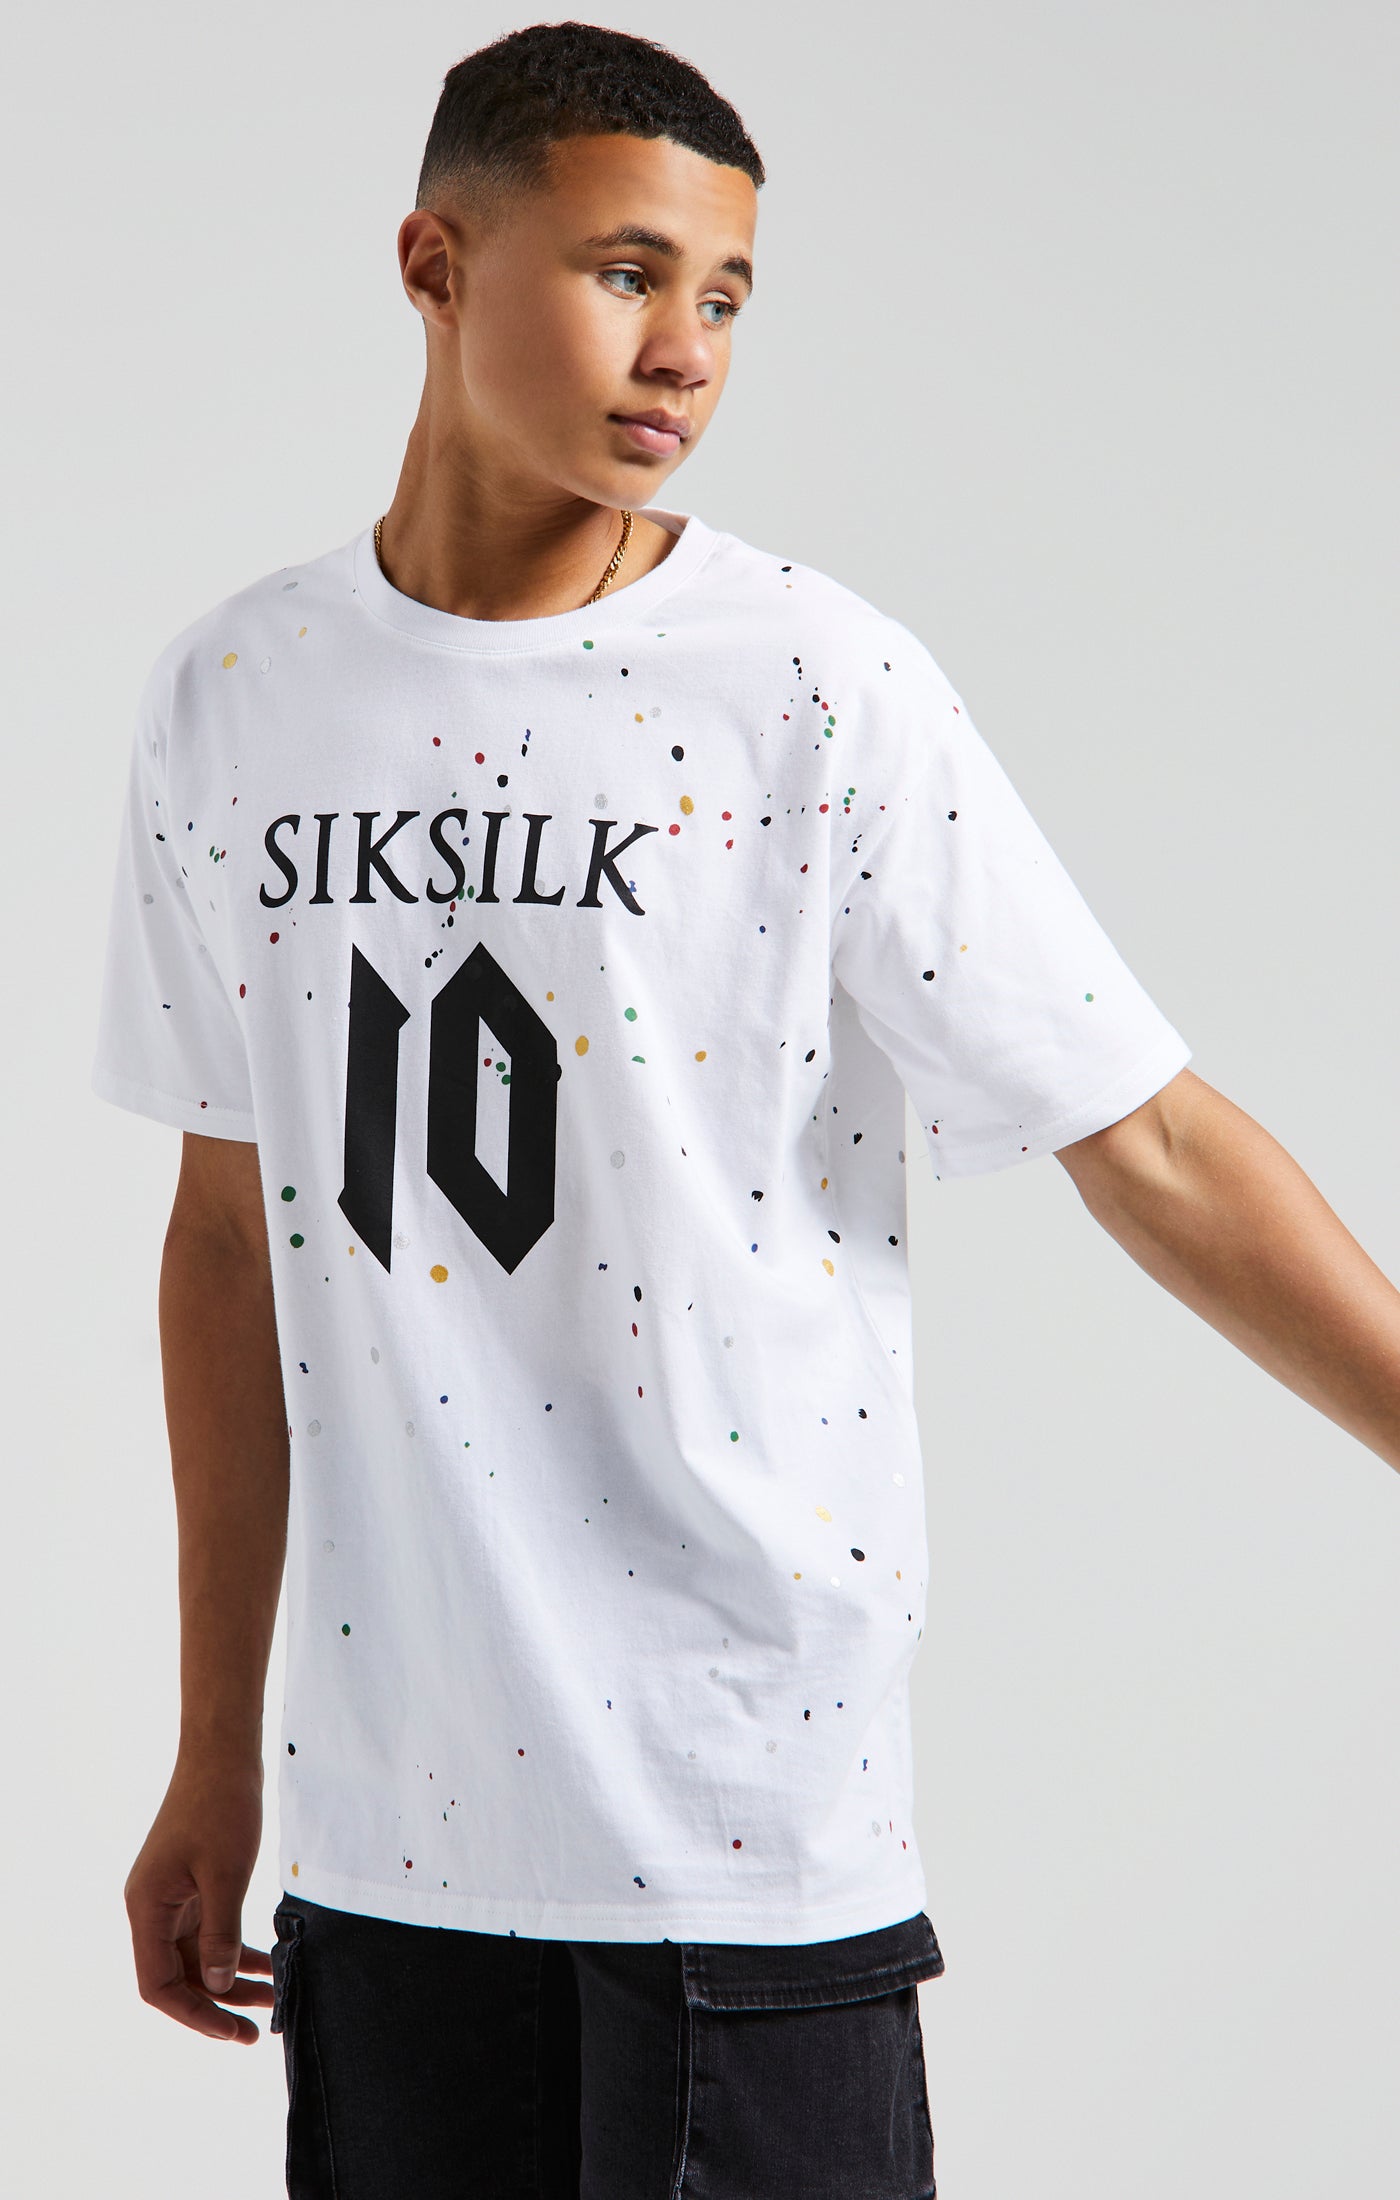 Messi x SikSilk Farbspritzer-T-Shirt - Weiß (2)